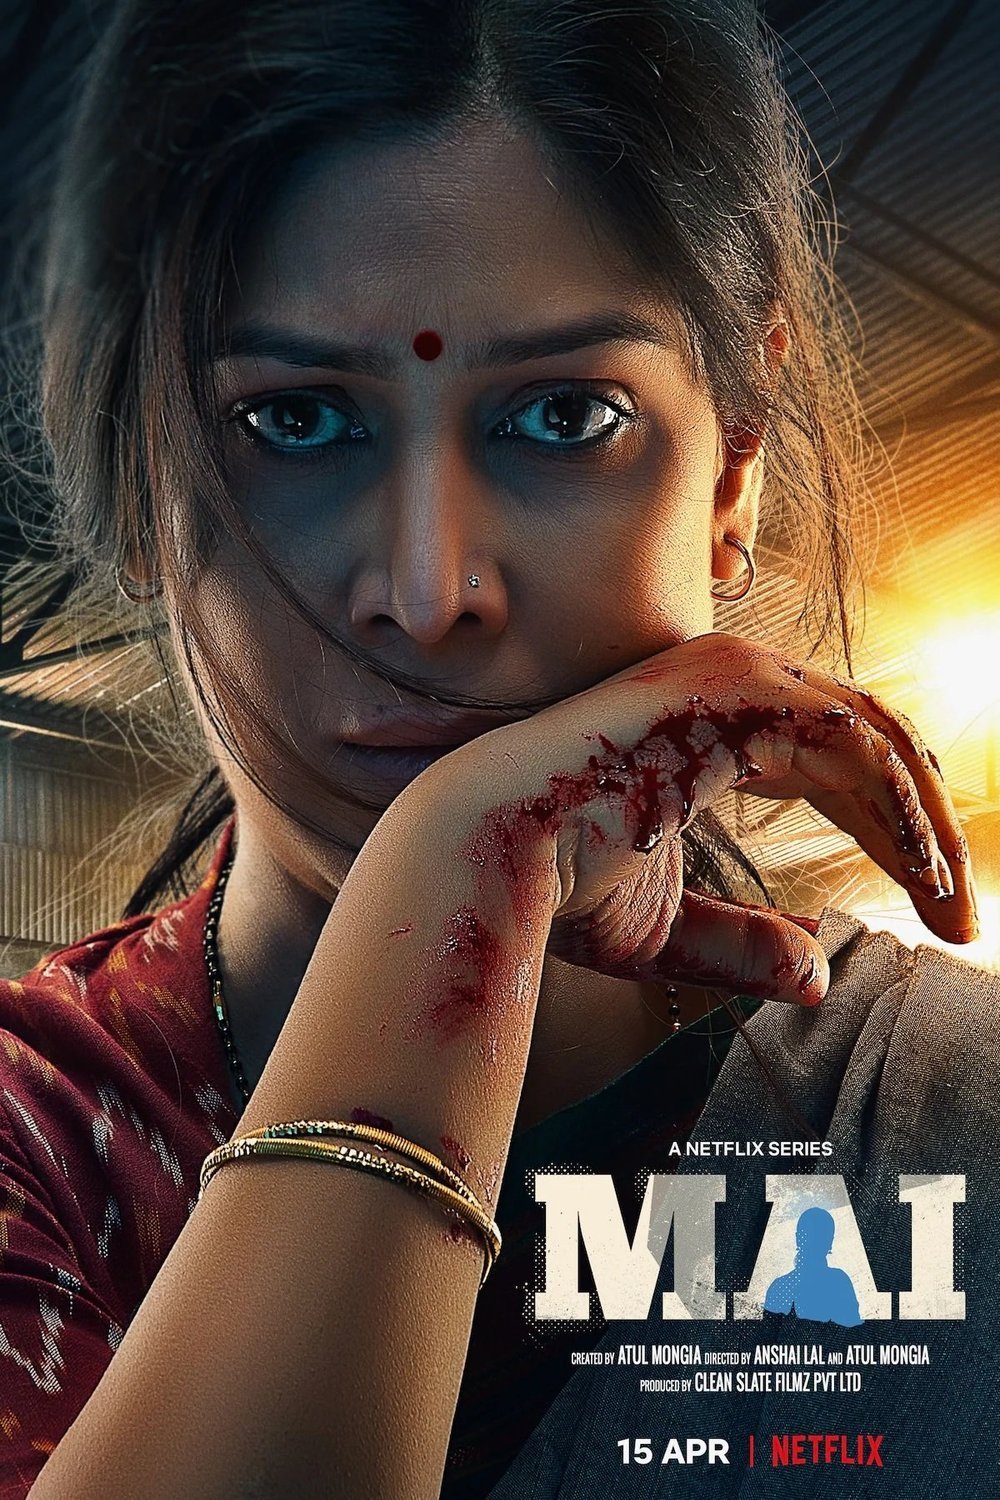 Hindi poster of the movie Mai